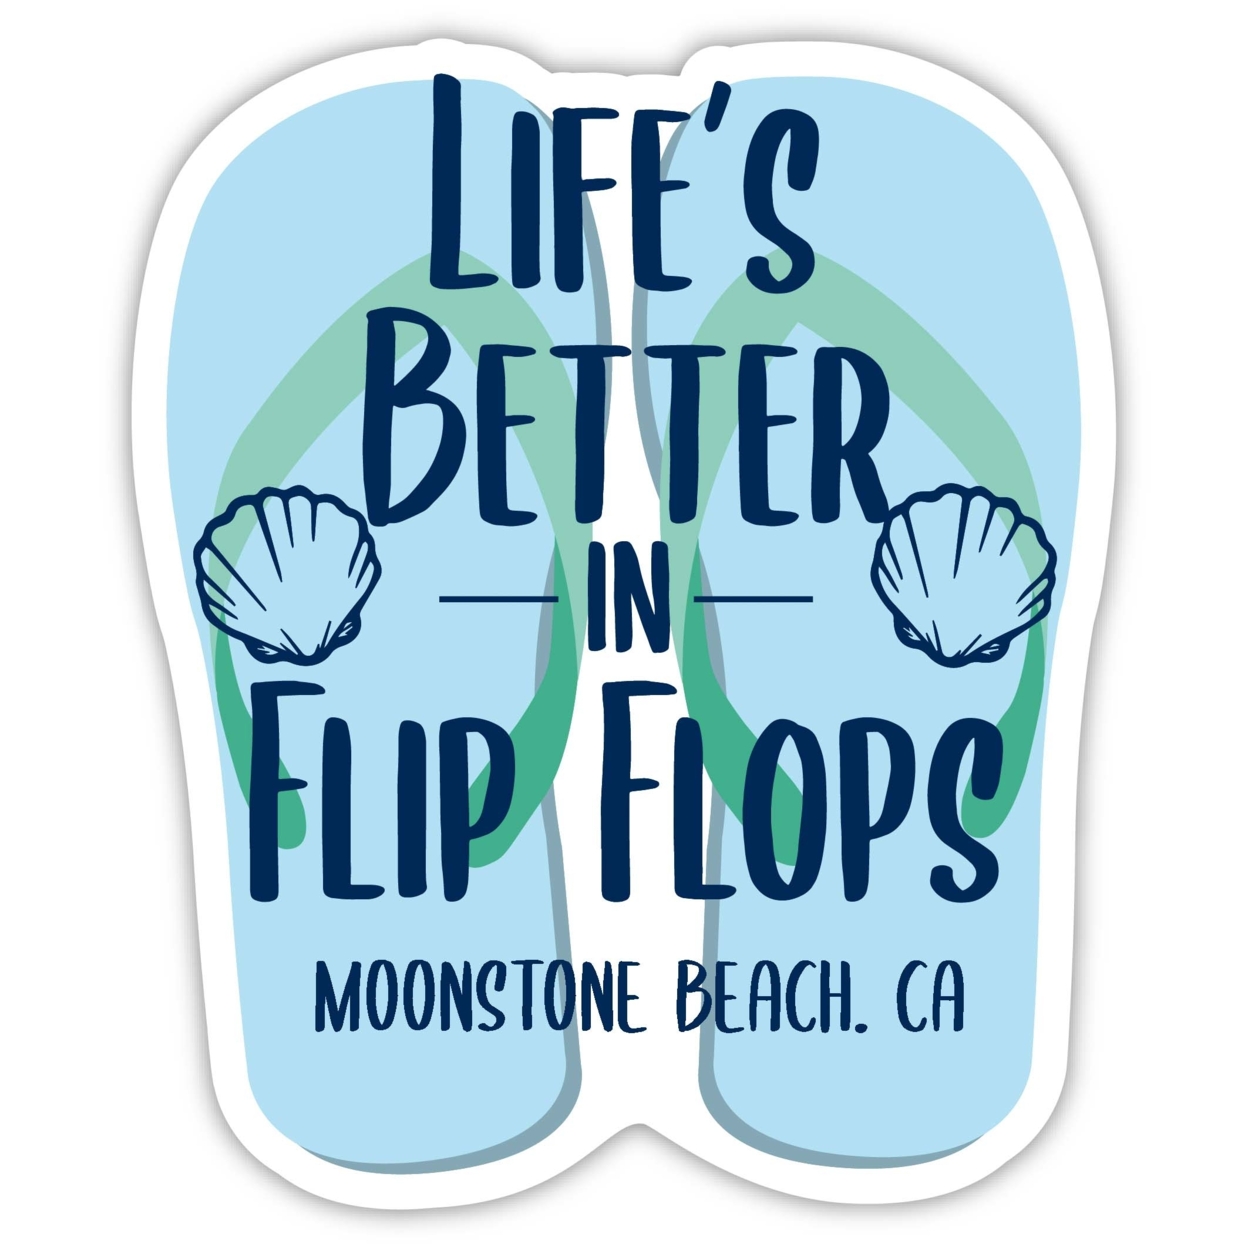 Moonstone Beach California Souvenir 4 Inch Vinyl Decal Sticker Flip Flop Design